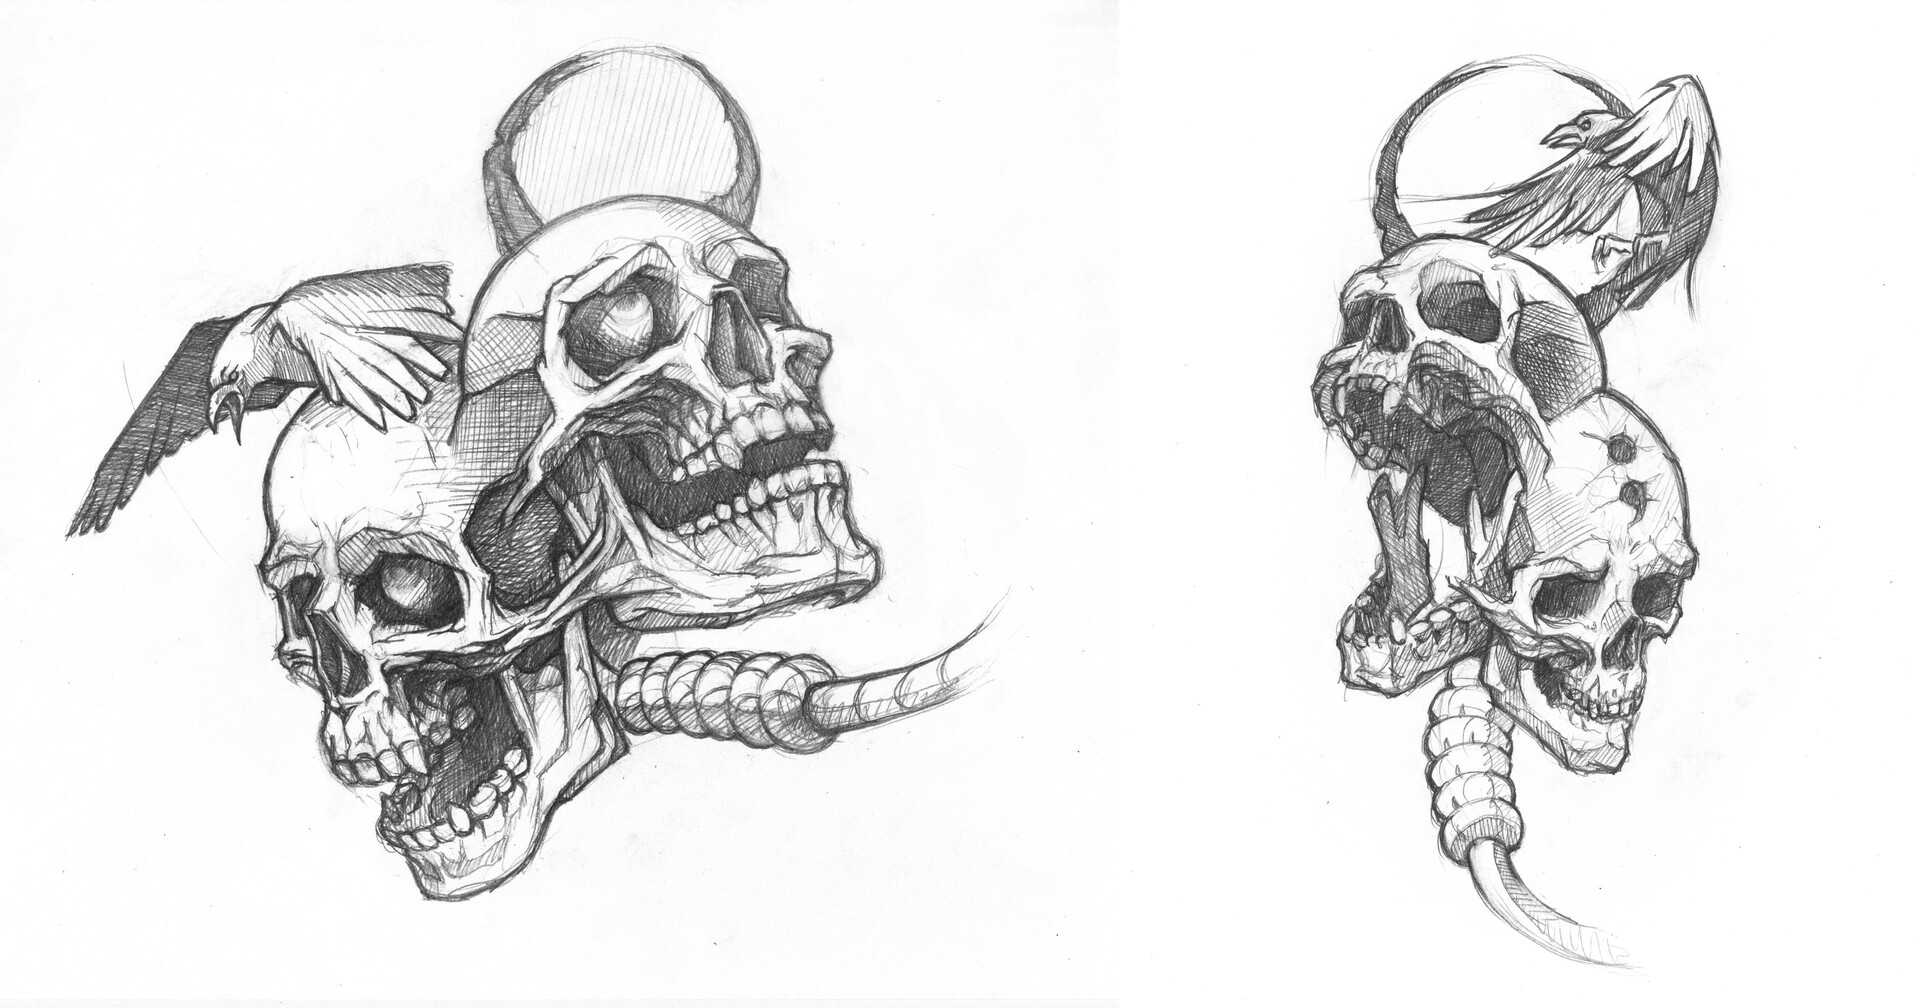 ArtStation - A series of pencil drawings of the skull. Custom tattoo design